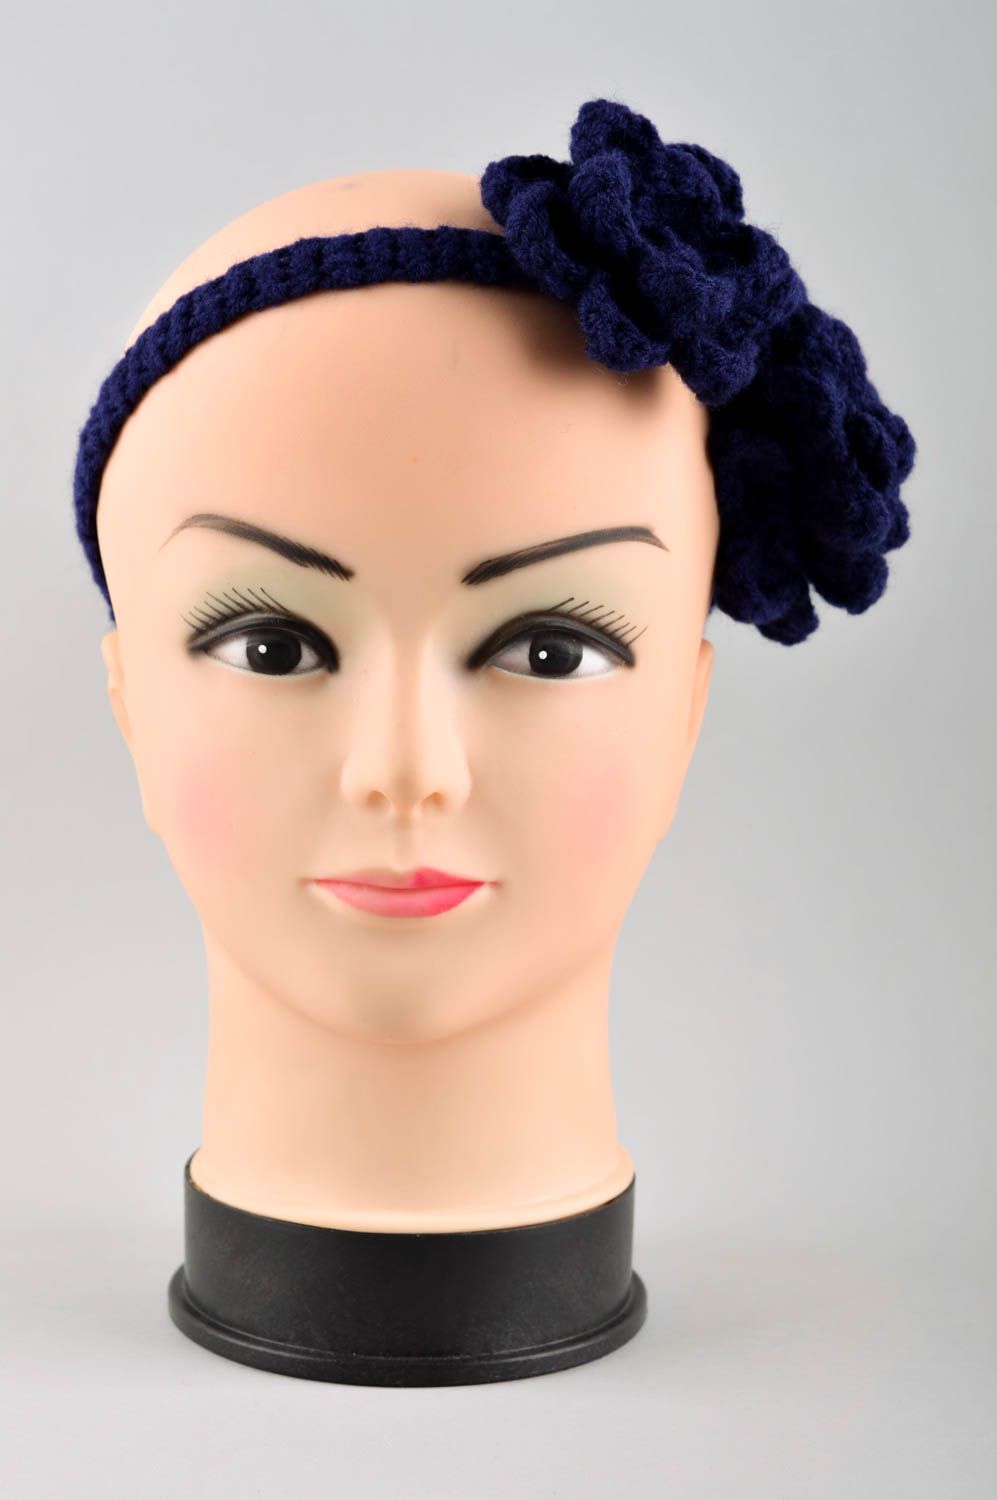 Handmade headband designer acessory gift ideas knitted hedband for girls photo 3